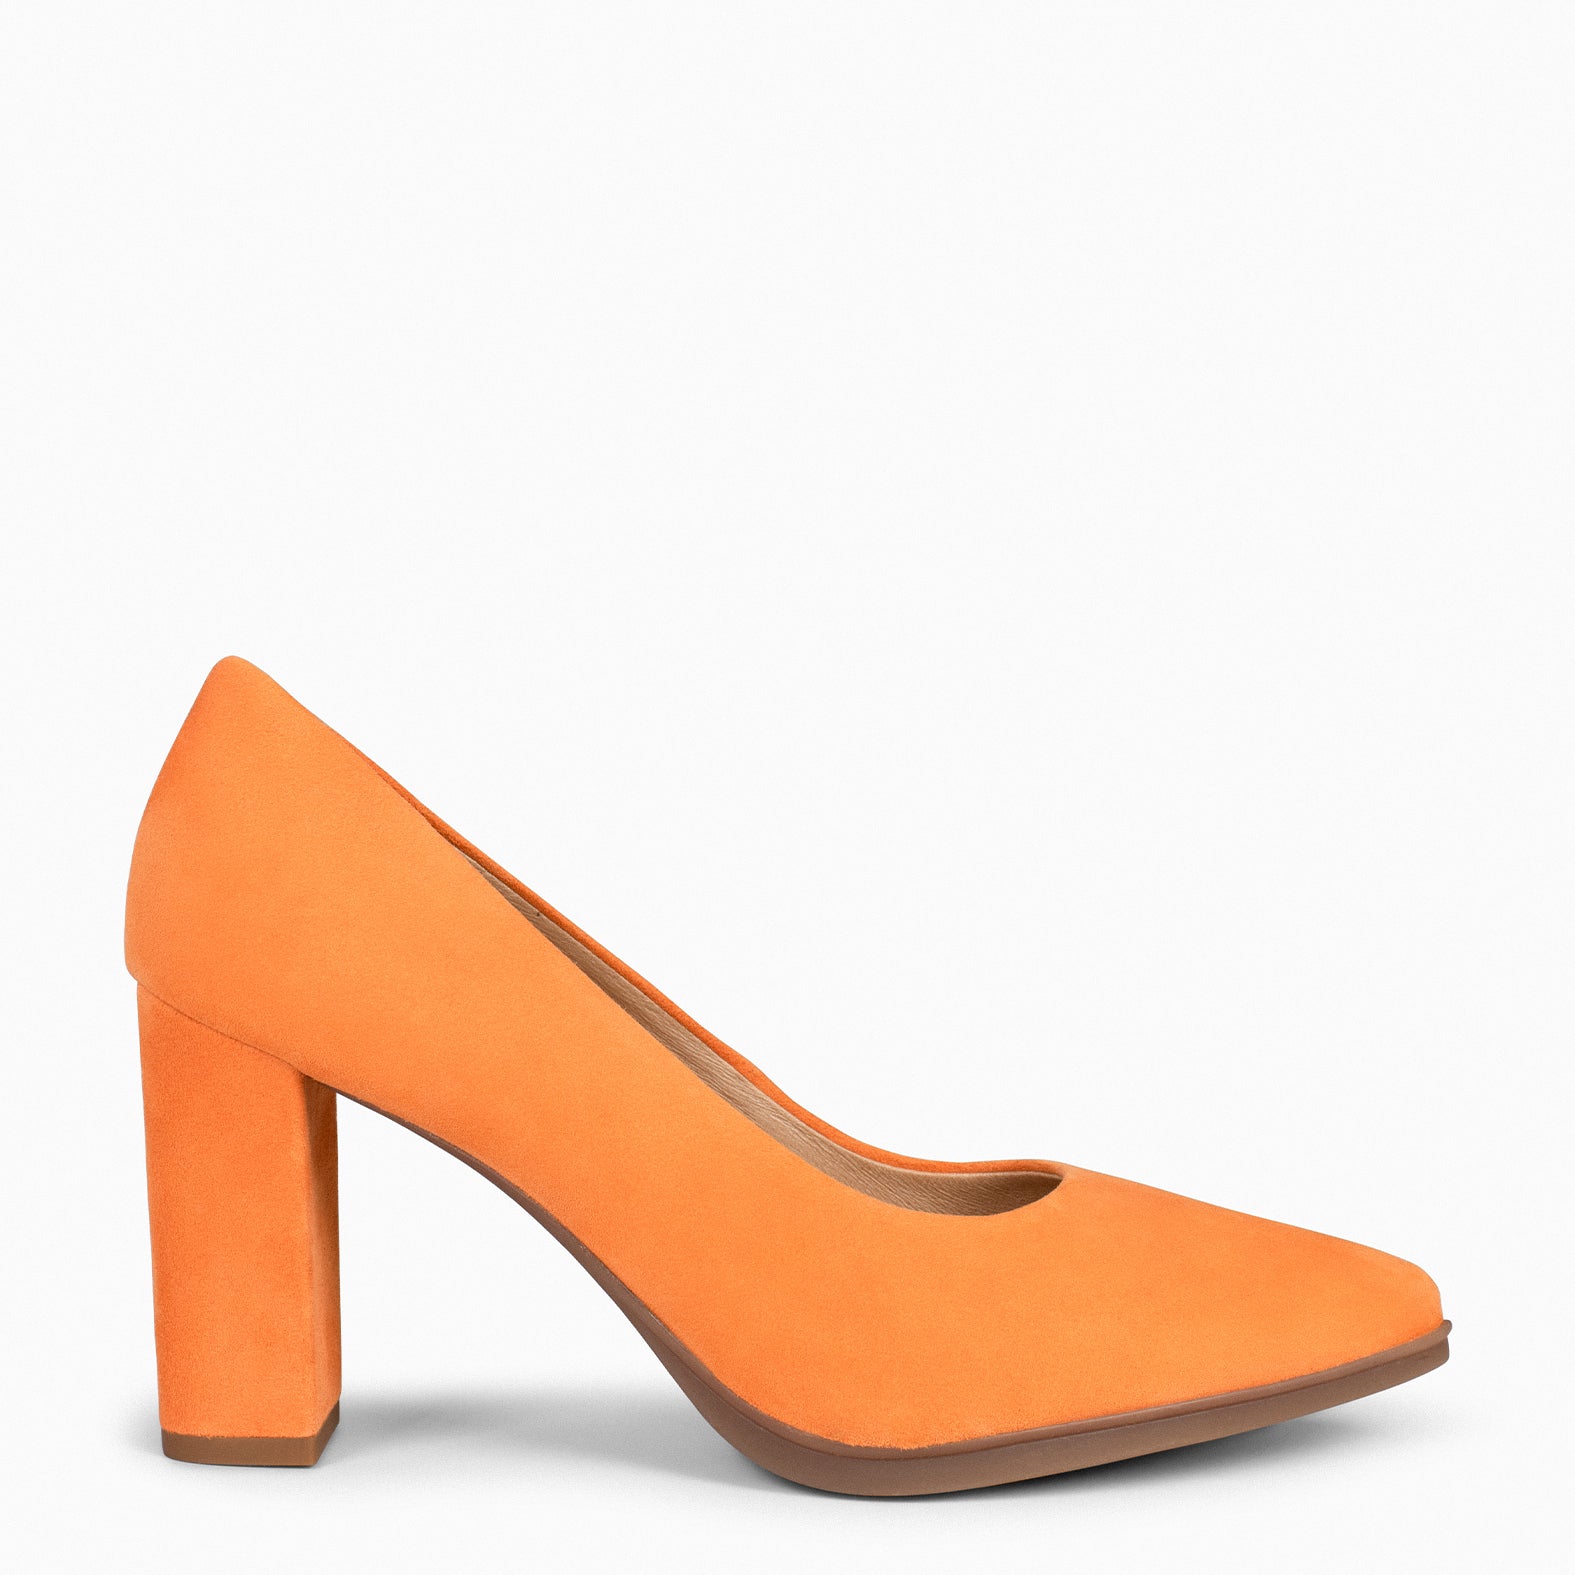 URBAN – ORANGE Suede high-heeled shoes 